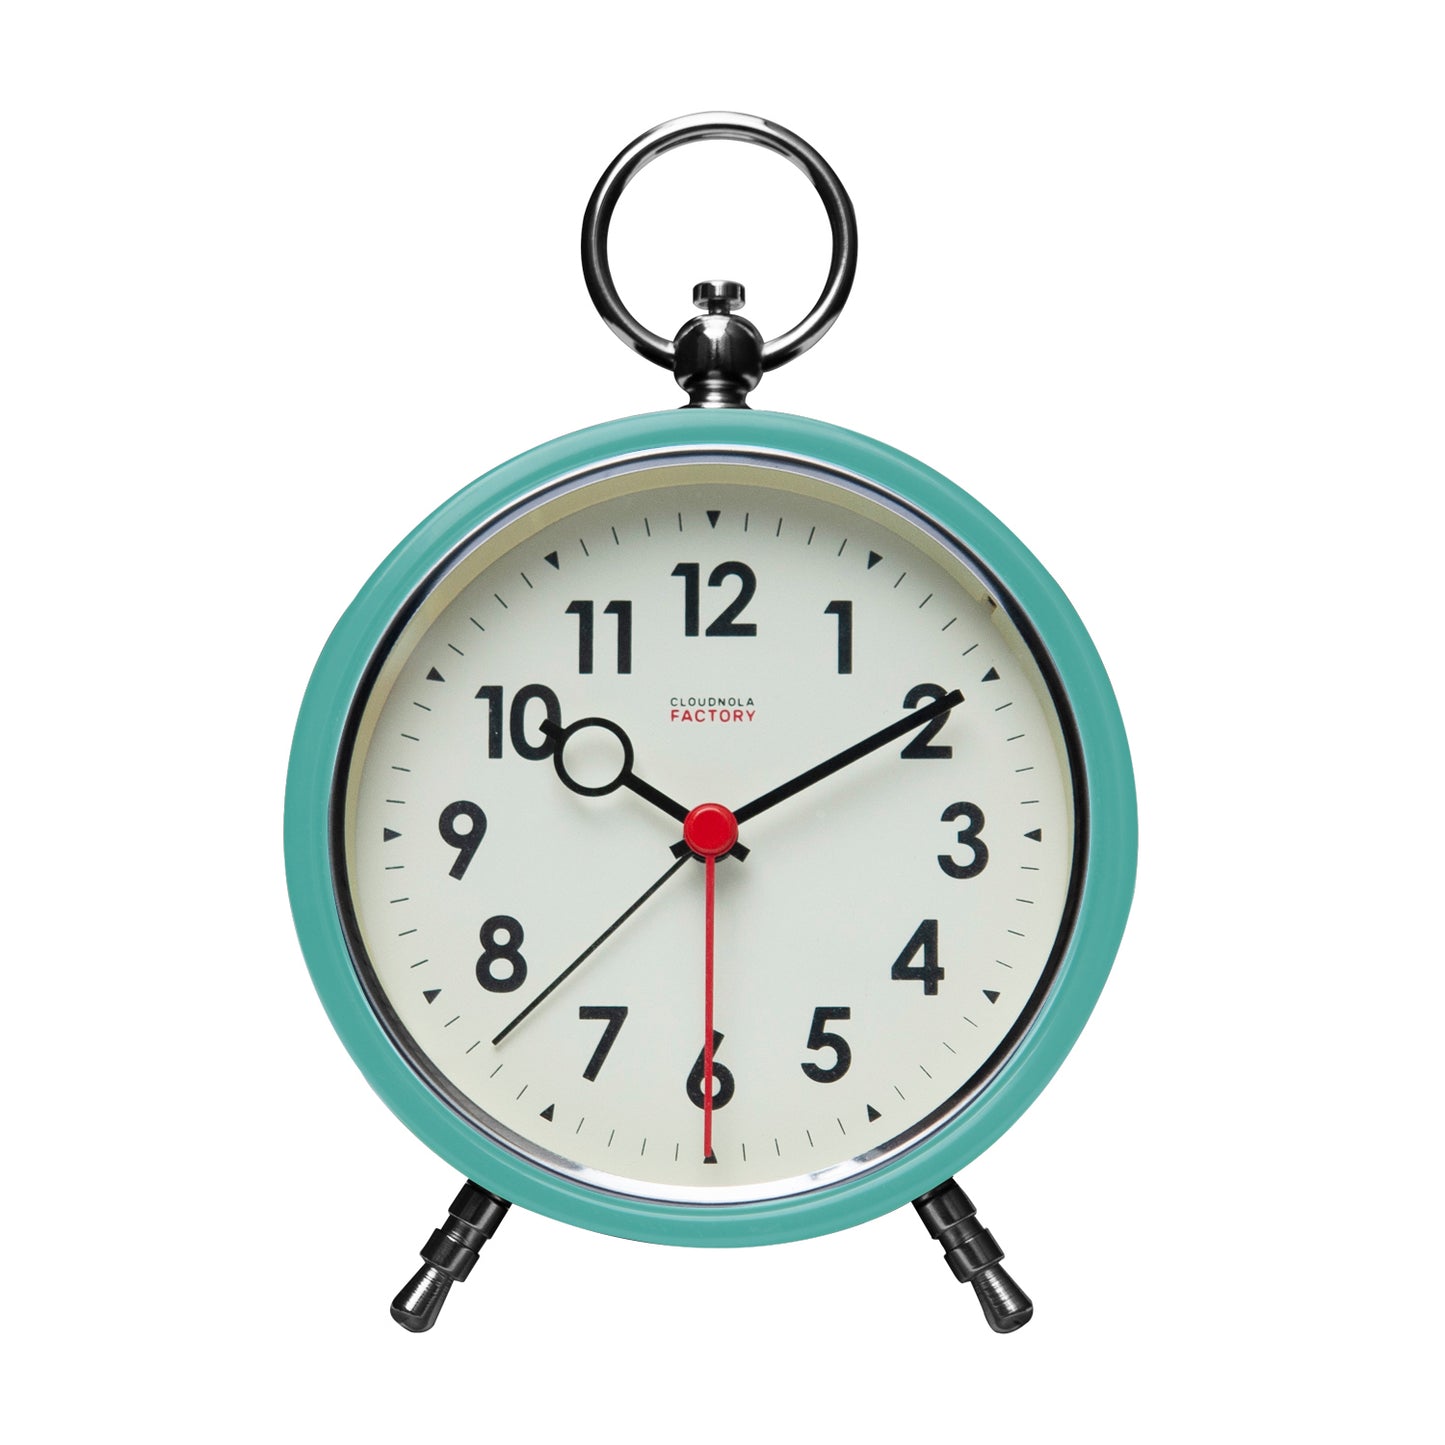 Factory Turquoise Alarm Clock